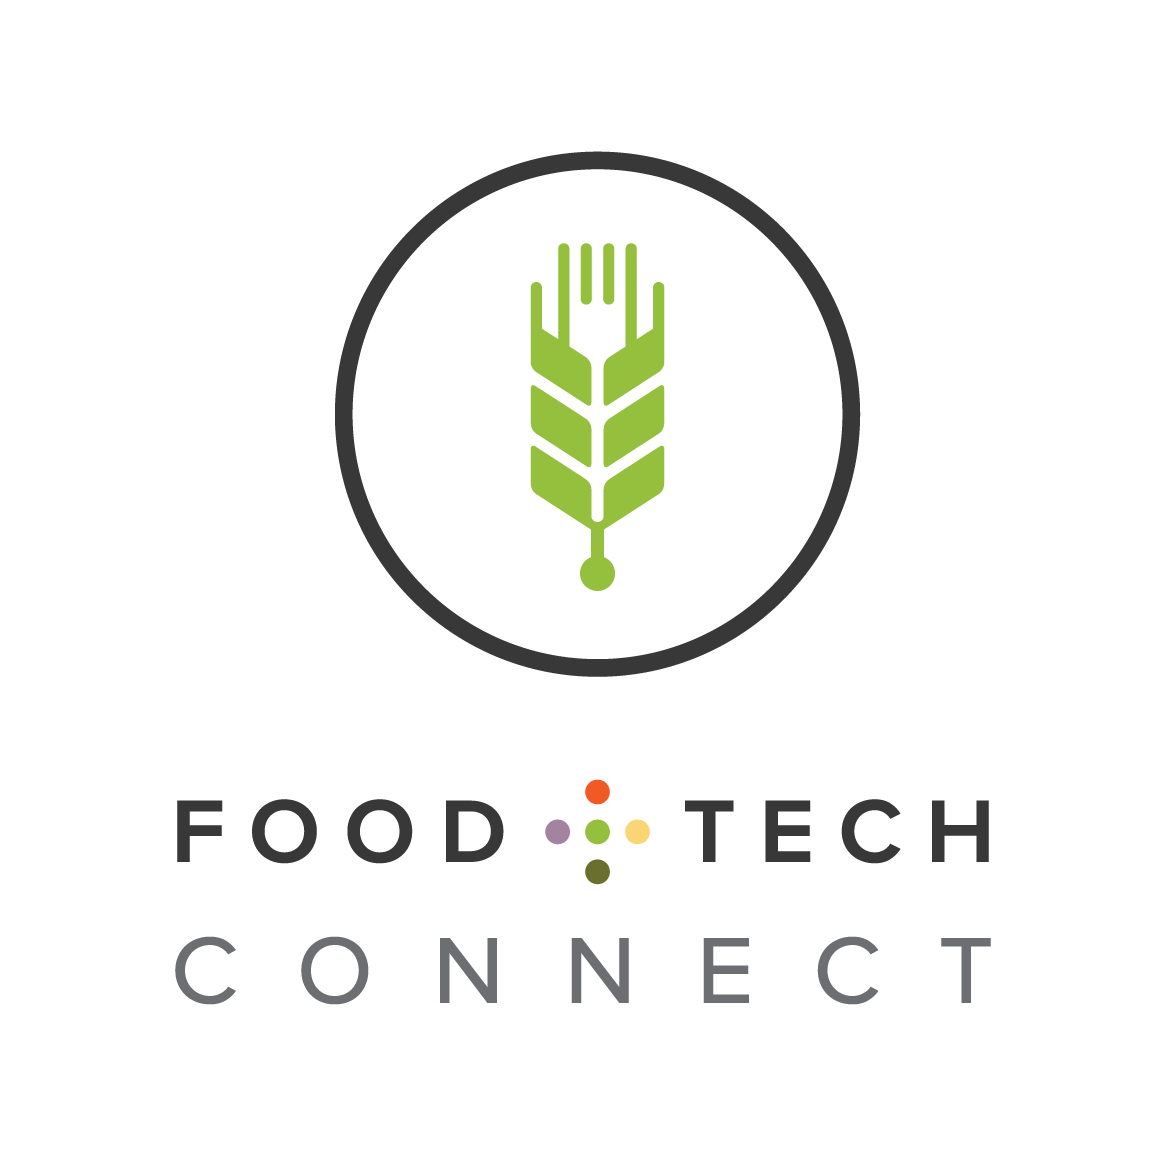 Food, Tech, Connect Logo